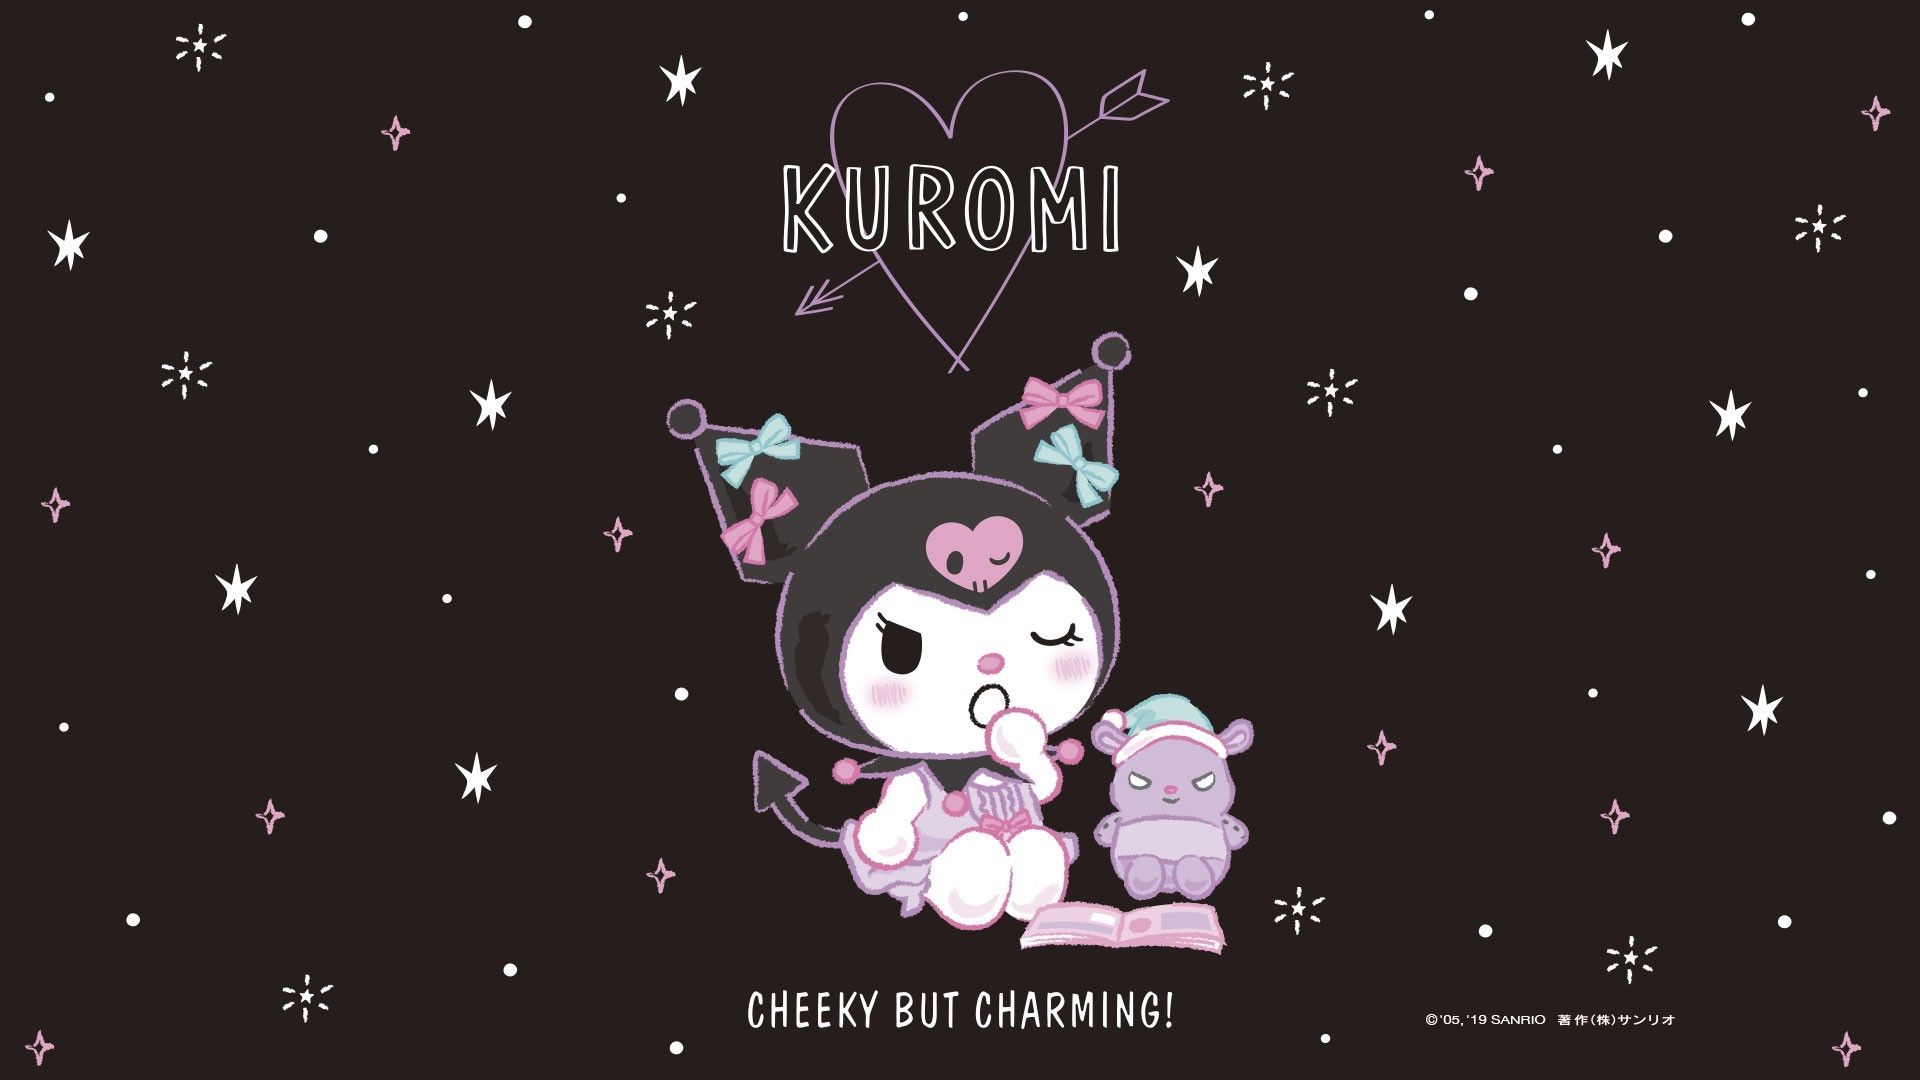 Kuromi's stuff(ღˇ◡ˇღ)